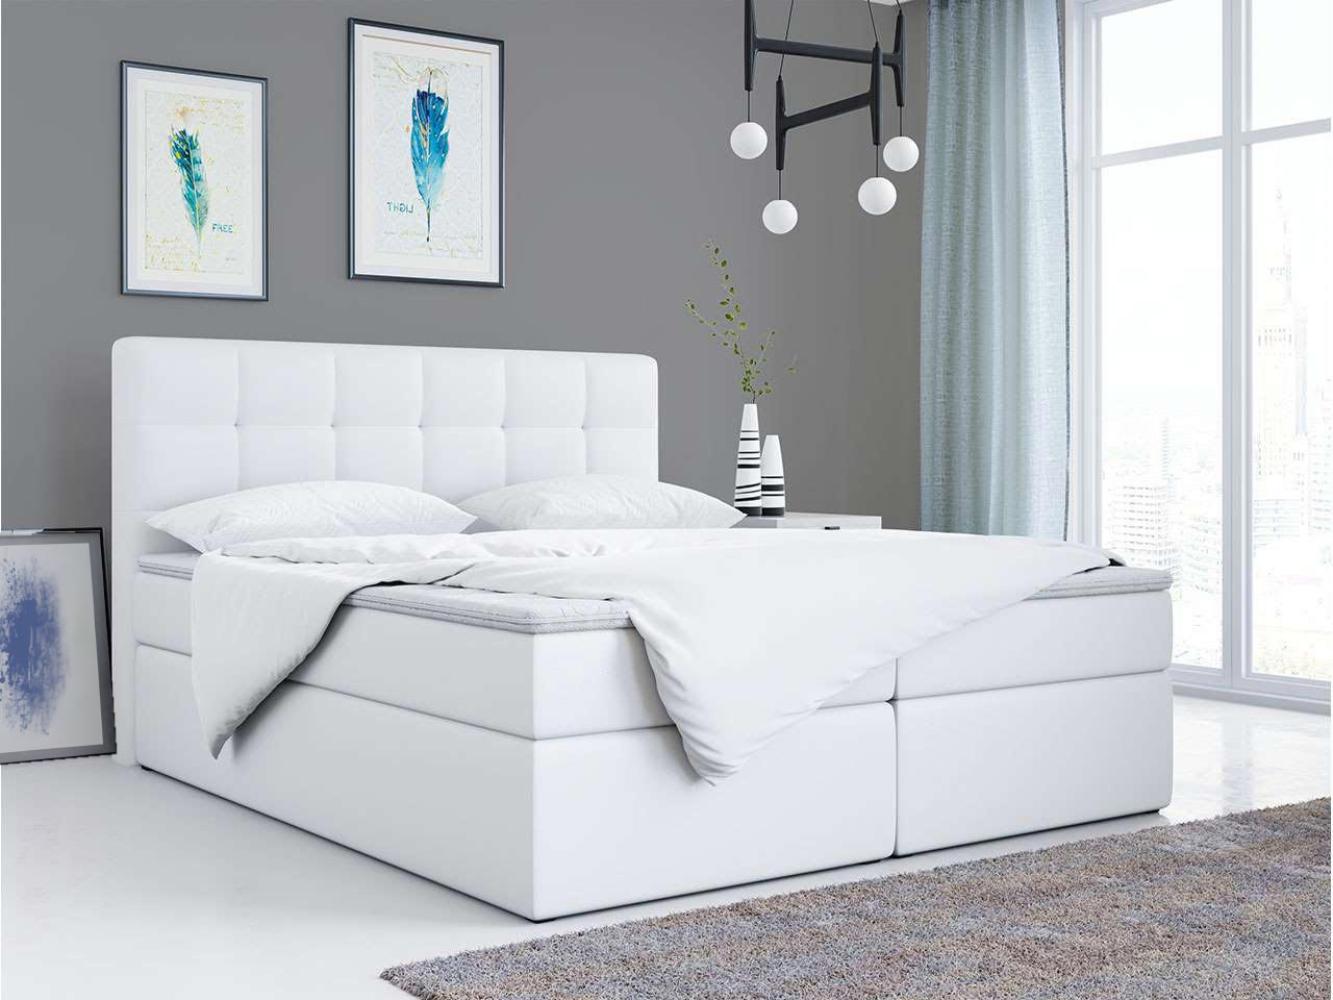 Doppelbett Polsterbett Kunstlederbett mit Bettkasten - TOP-2 - 200x200cm - Weiß Kunstleder - H4 Bild 1